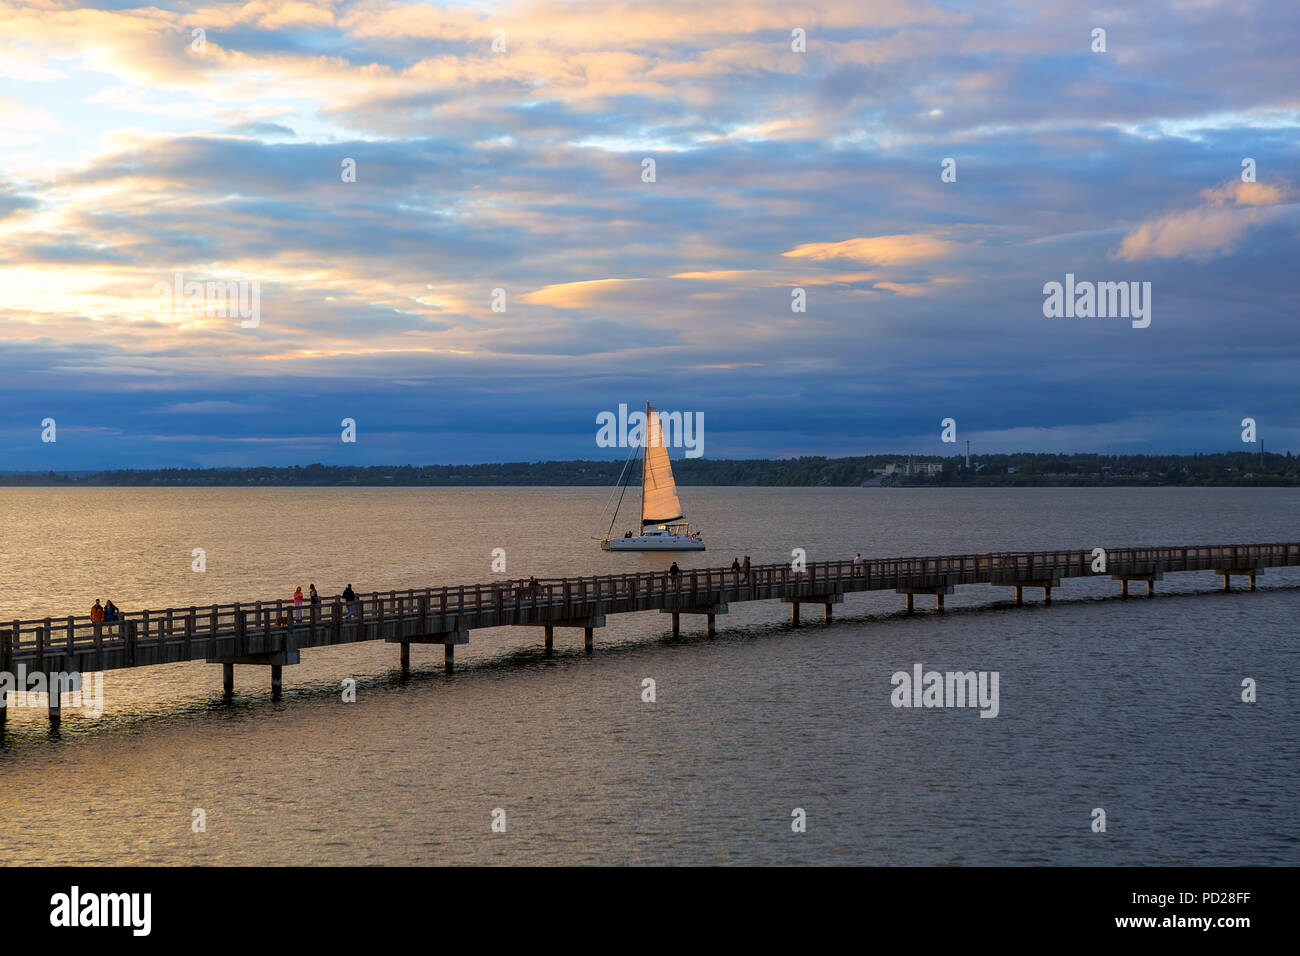 Sailing on Bellingham Bay by boardwalk at Boulevard Park in Bellingham Washington State during sunset Stock Photo